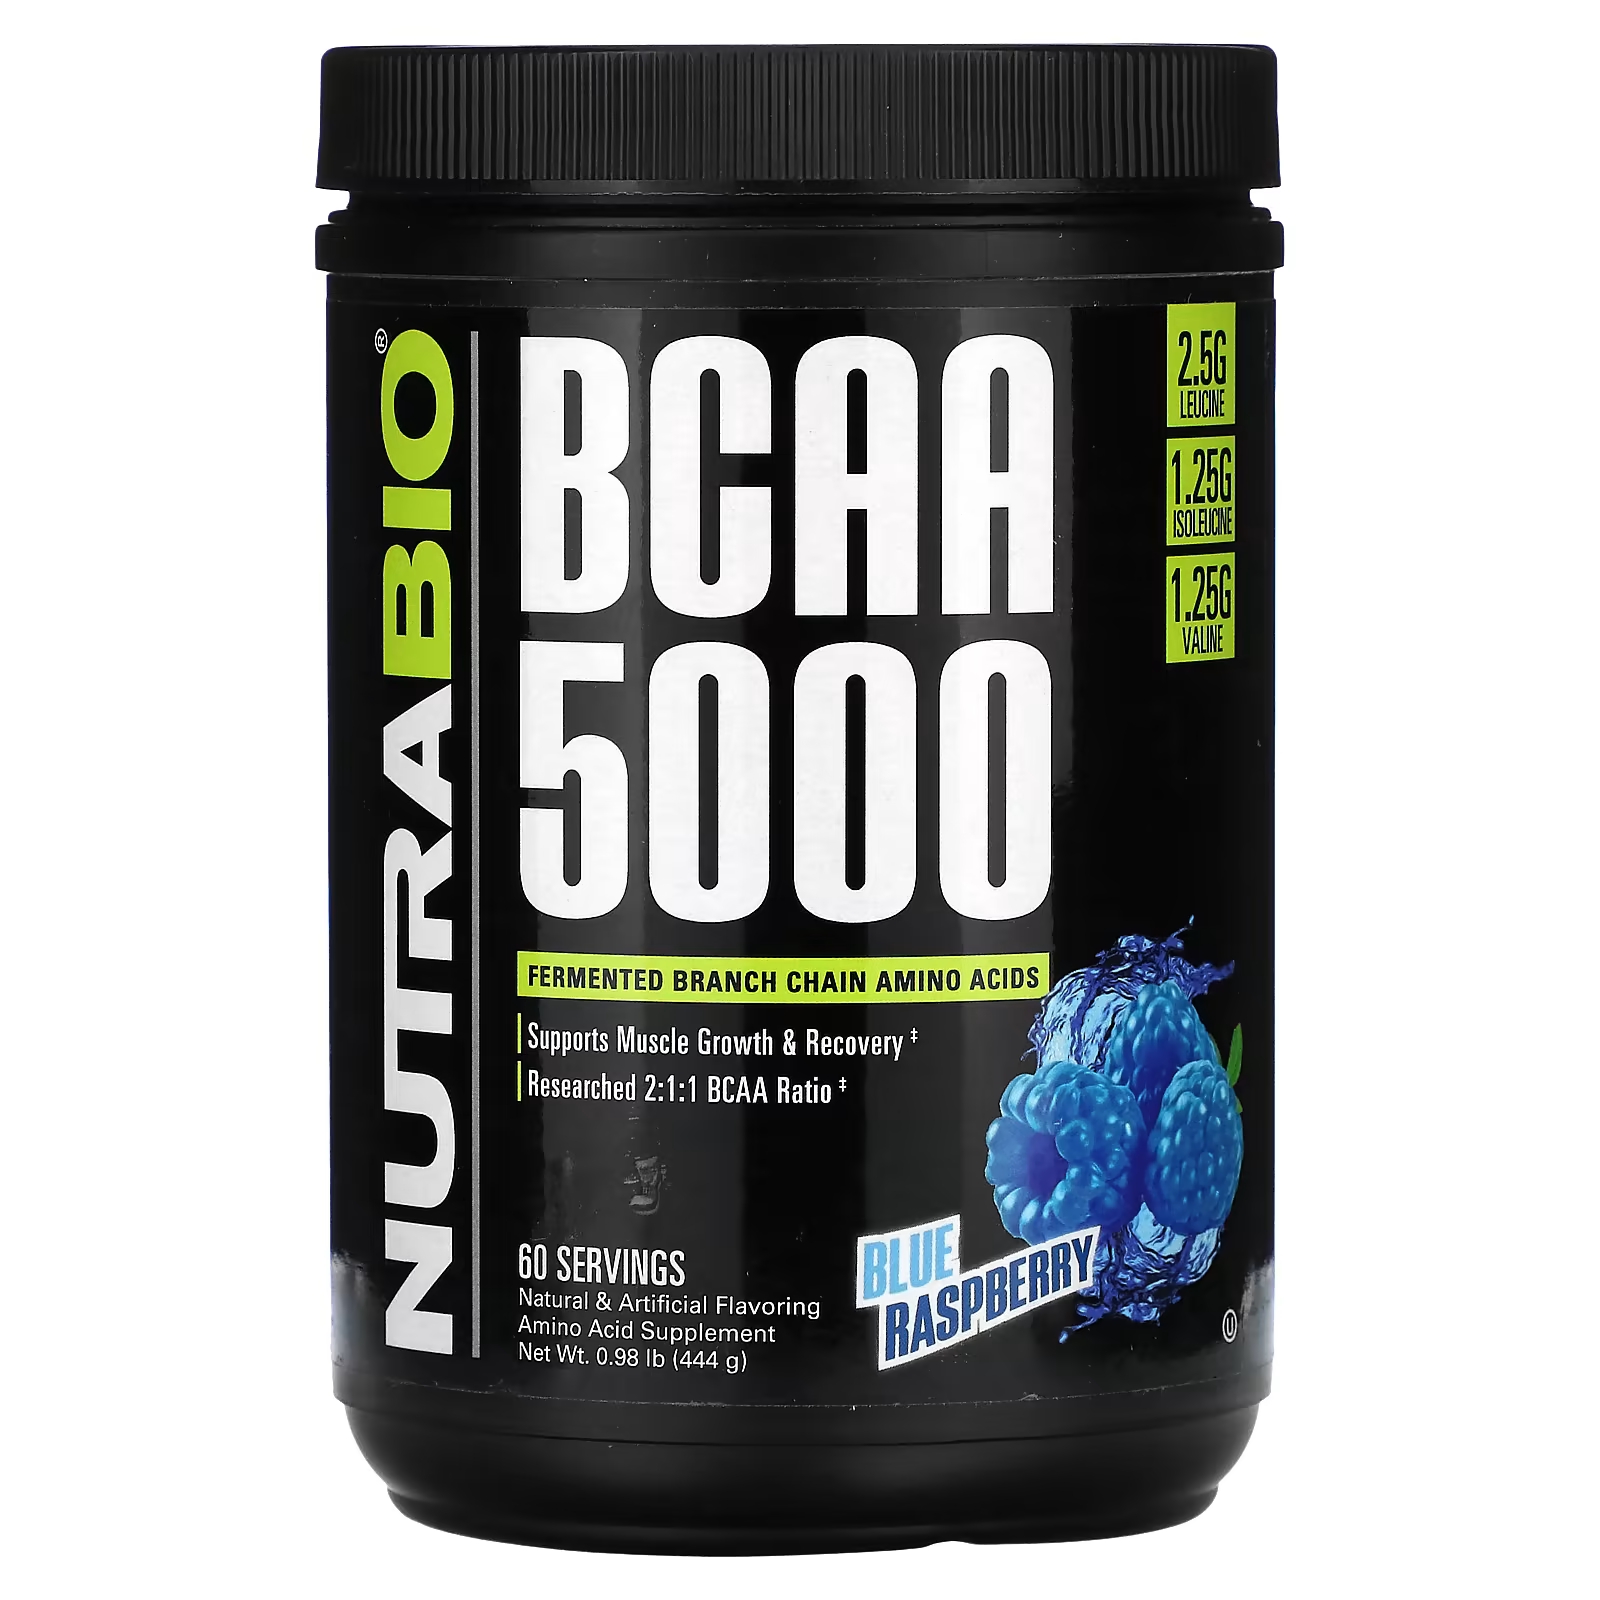 Пищевая добавка Nutrabio Labs BCAA 5000, голубая малина спортивная добавка nutrabio labs amino kick голубая малина 20 стиков по 9г